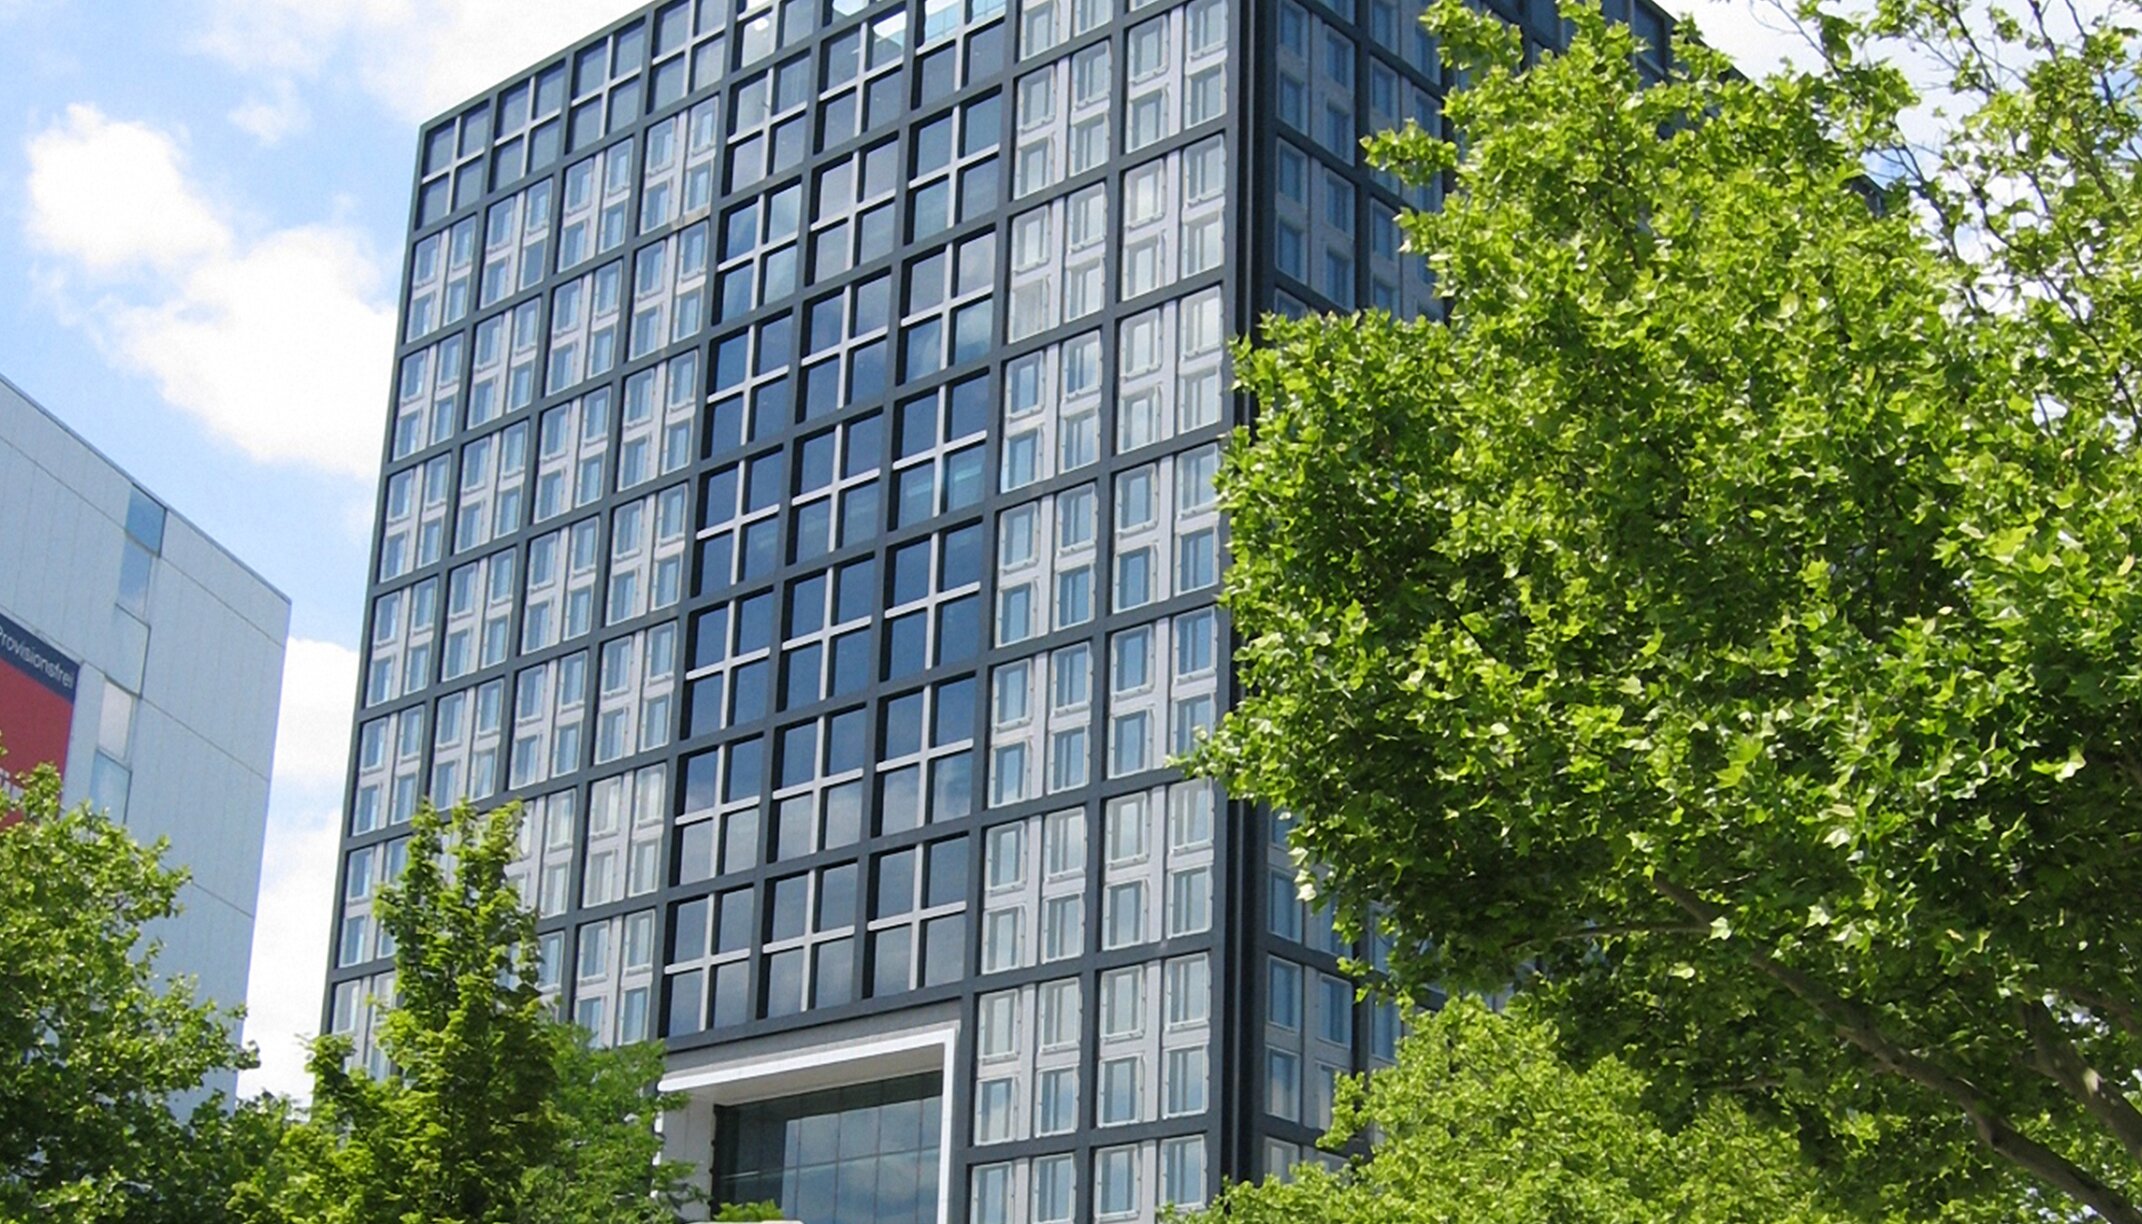 "Deutsche Börse Frankfurt"; powder-coated facade cladding made of aluminum